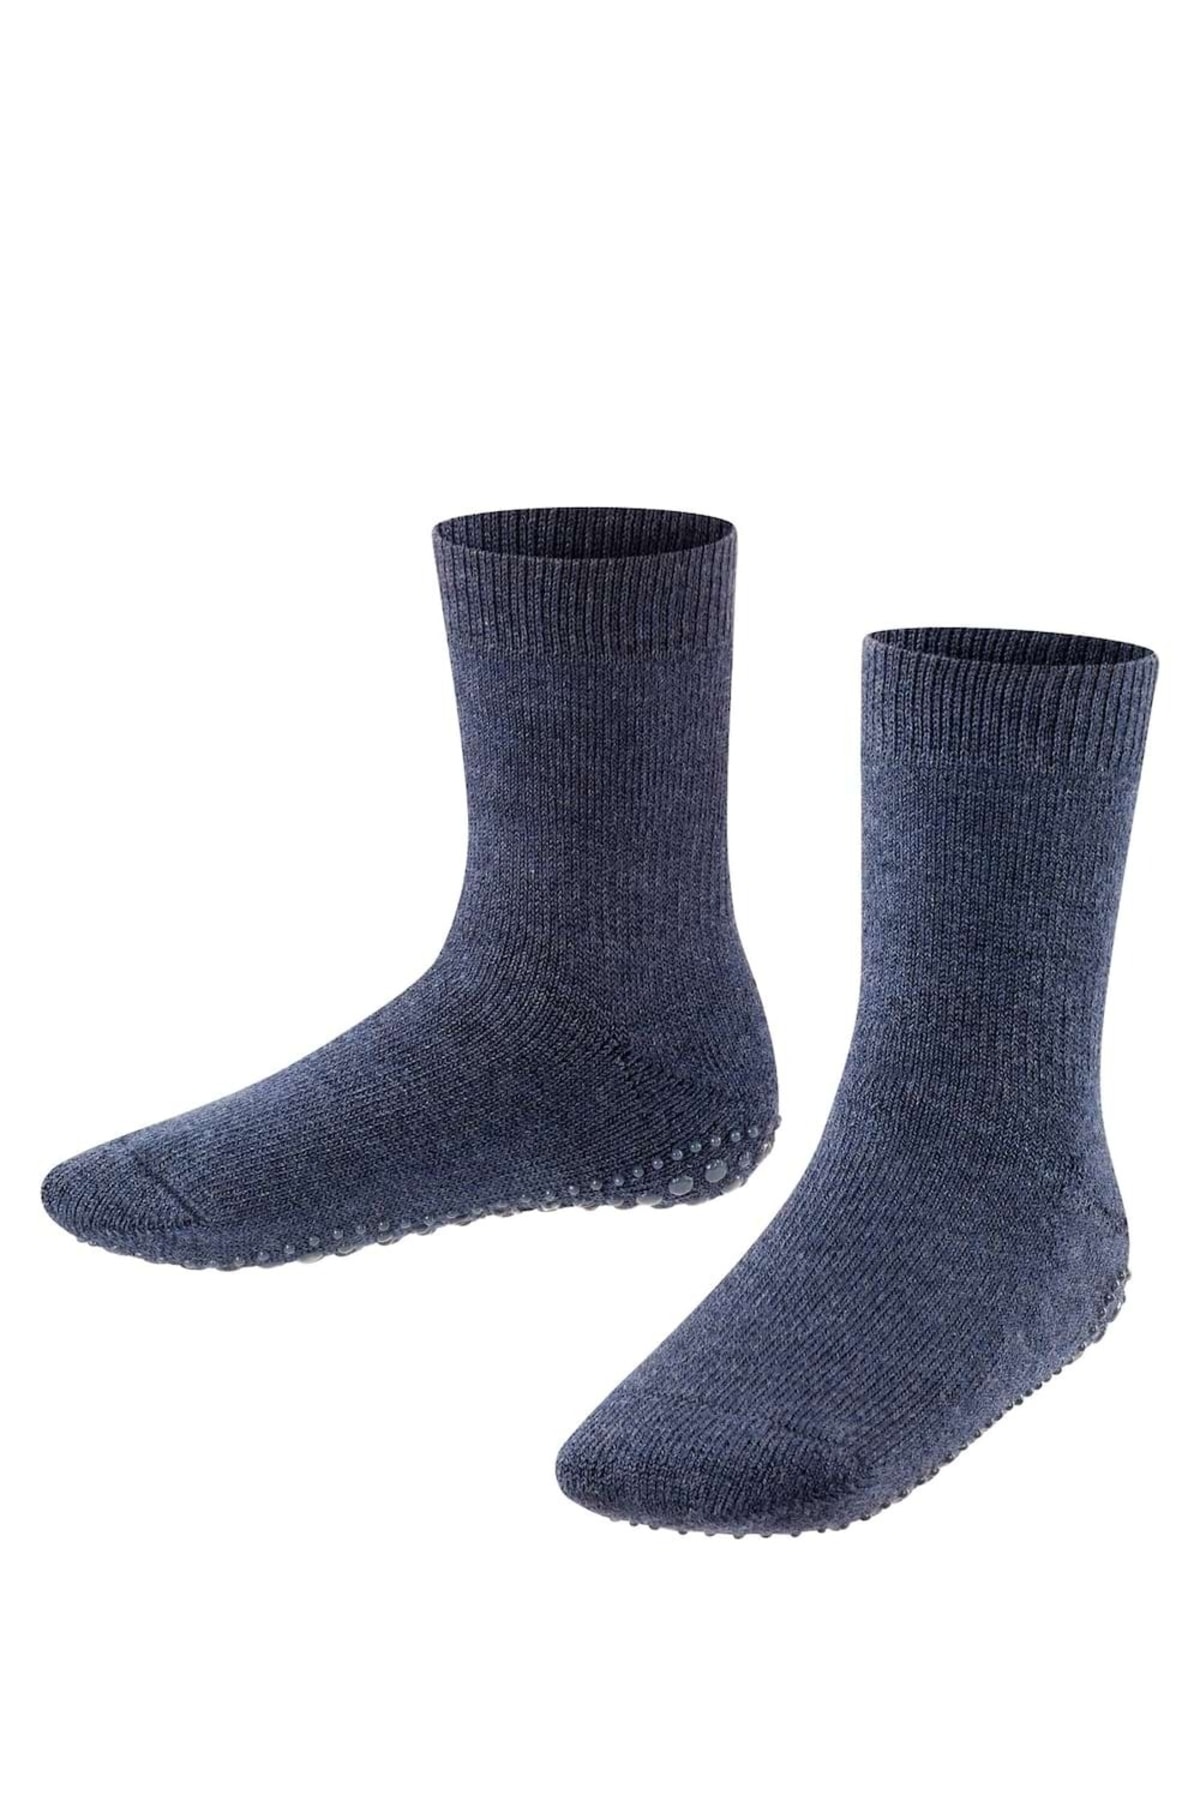 FALKE Socken Dunkelblau Casual – 31-34